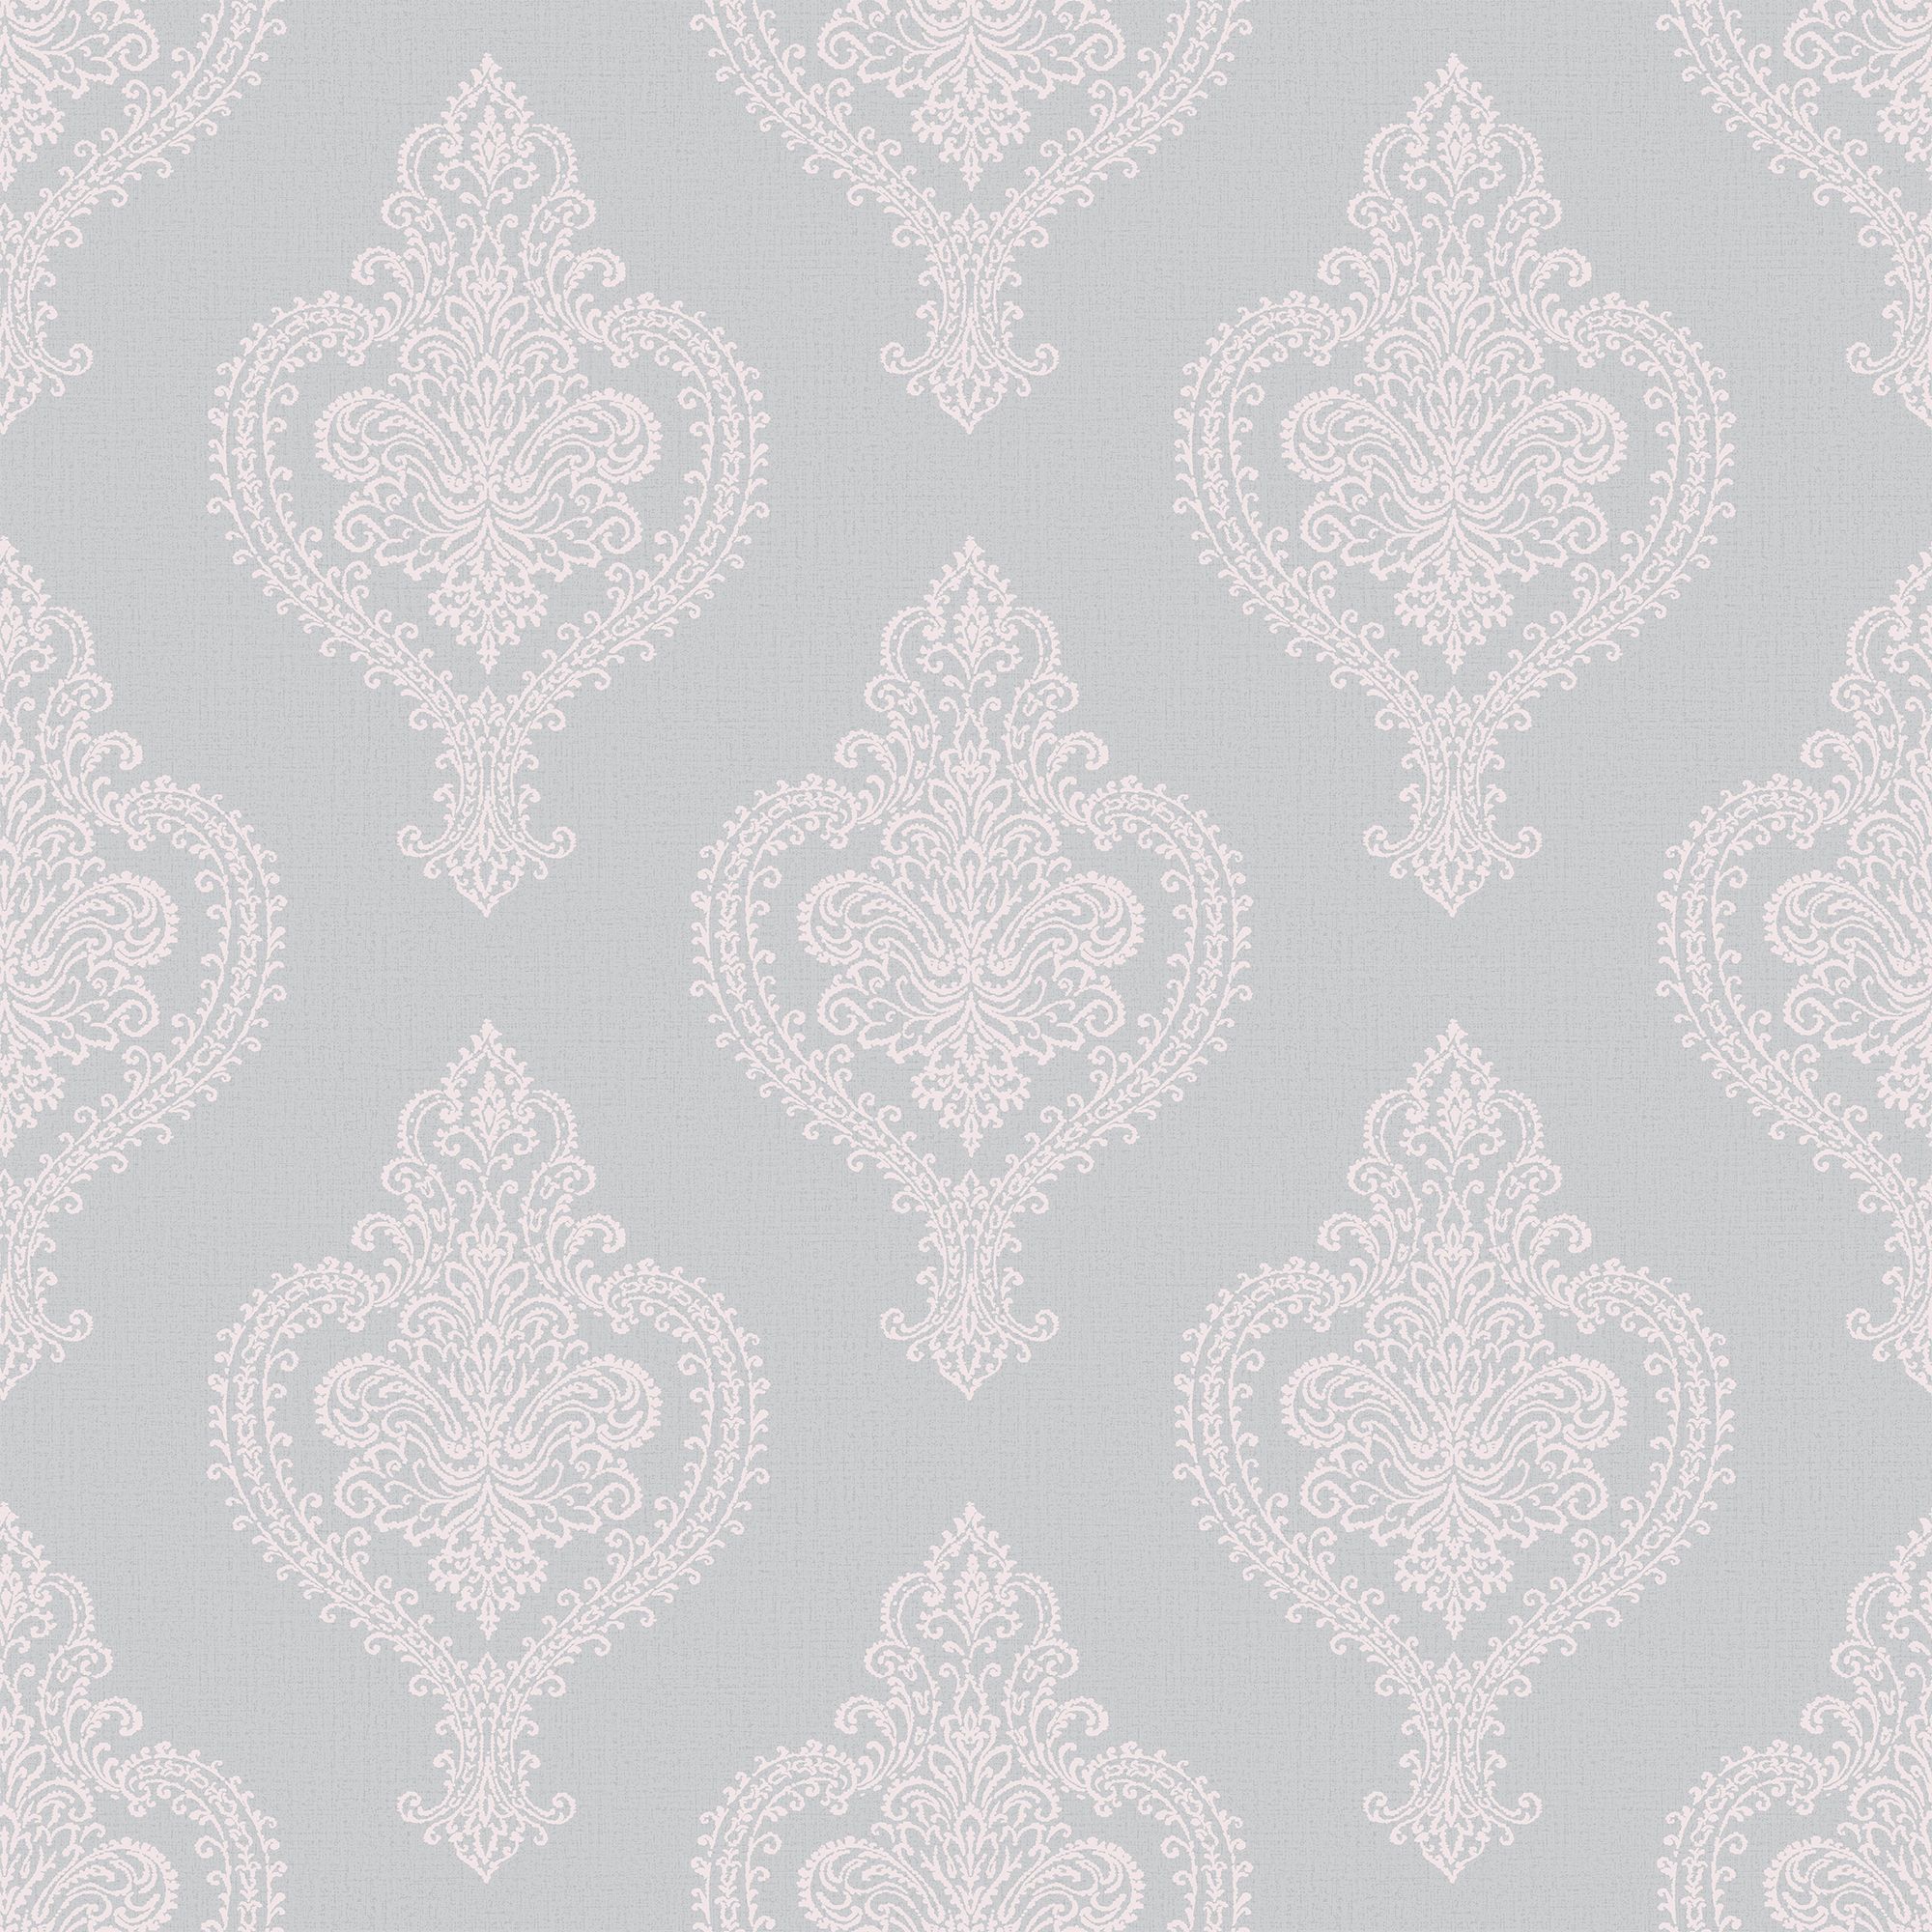 Grandeco Adalyn Blush grey Damask Mica effect Embossed Wallpaper Sample